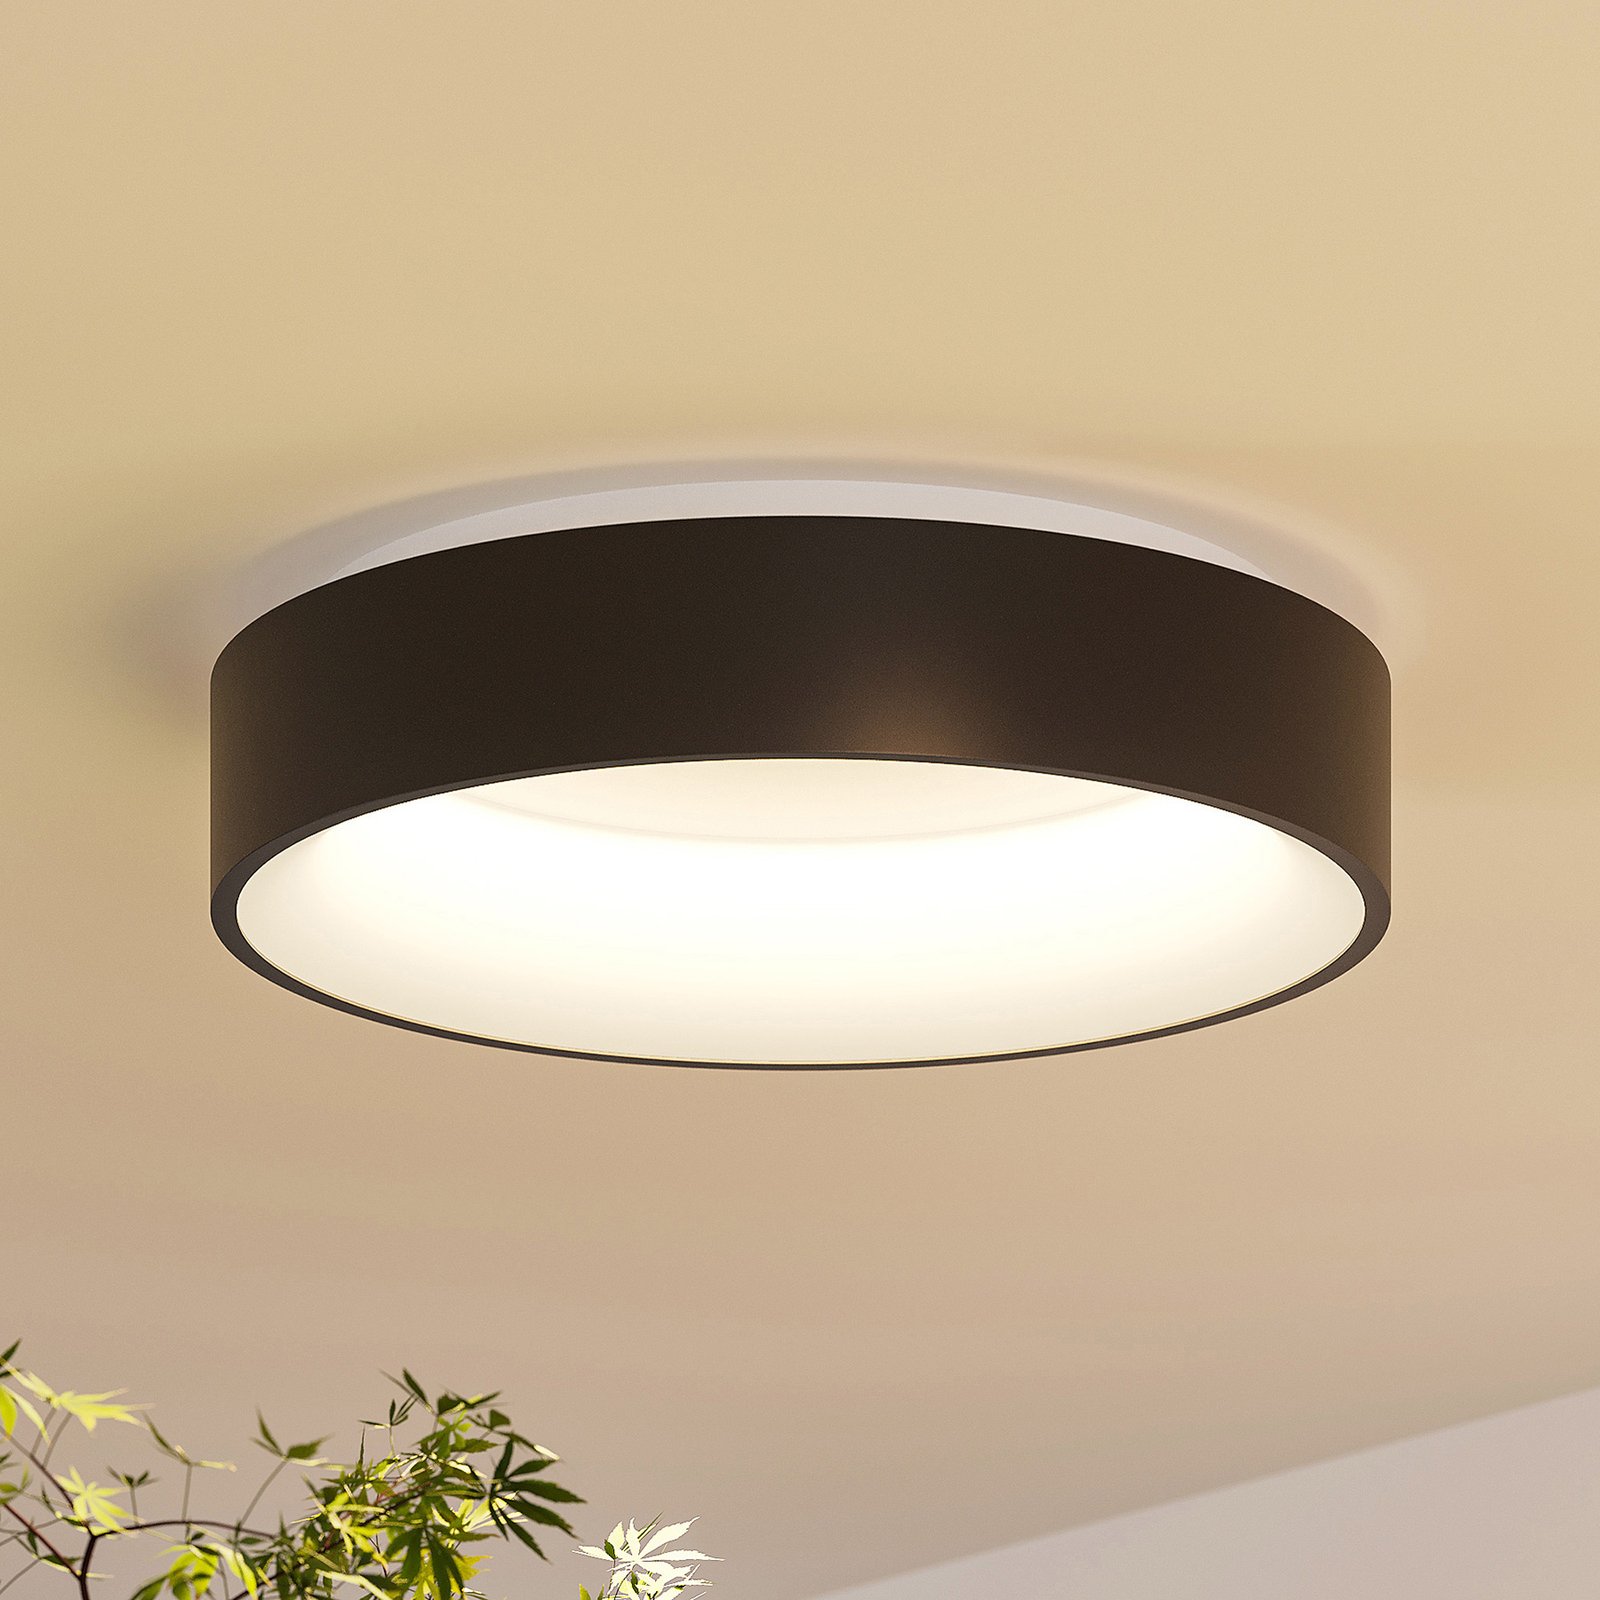 Arcchio Aleksi LED ceiling light, Ø 45 cm, round